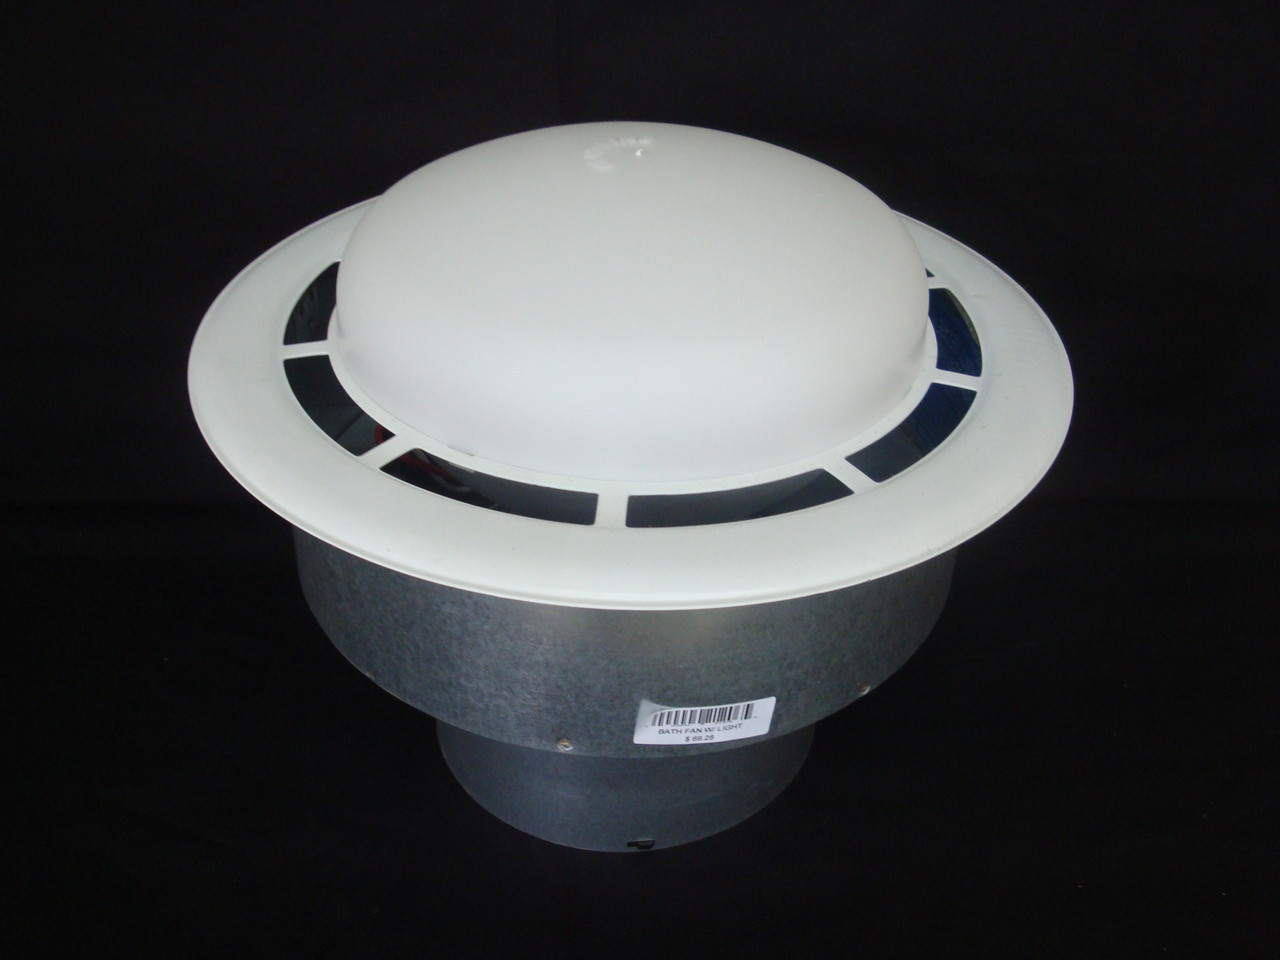 Mobile Home Bathroom Fan with light, Ventline brand bath vented fan